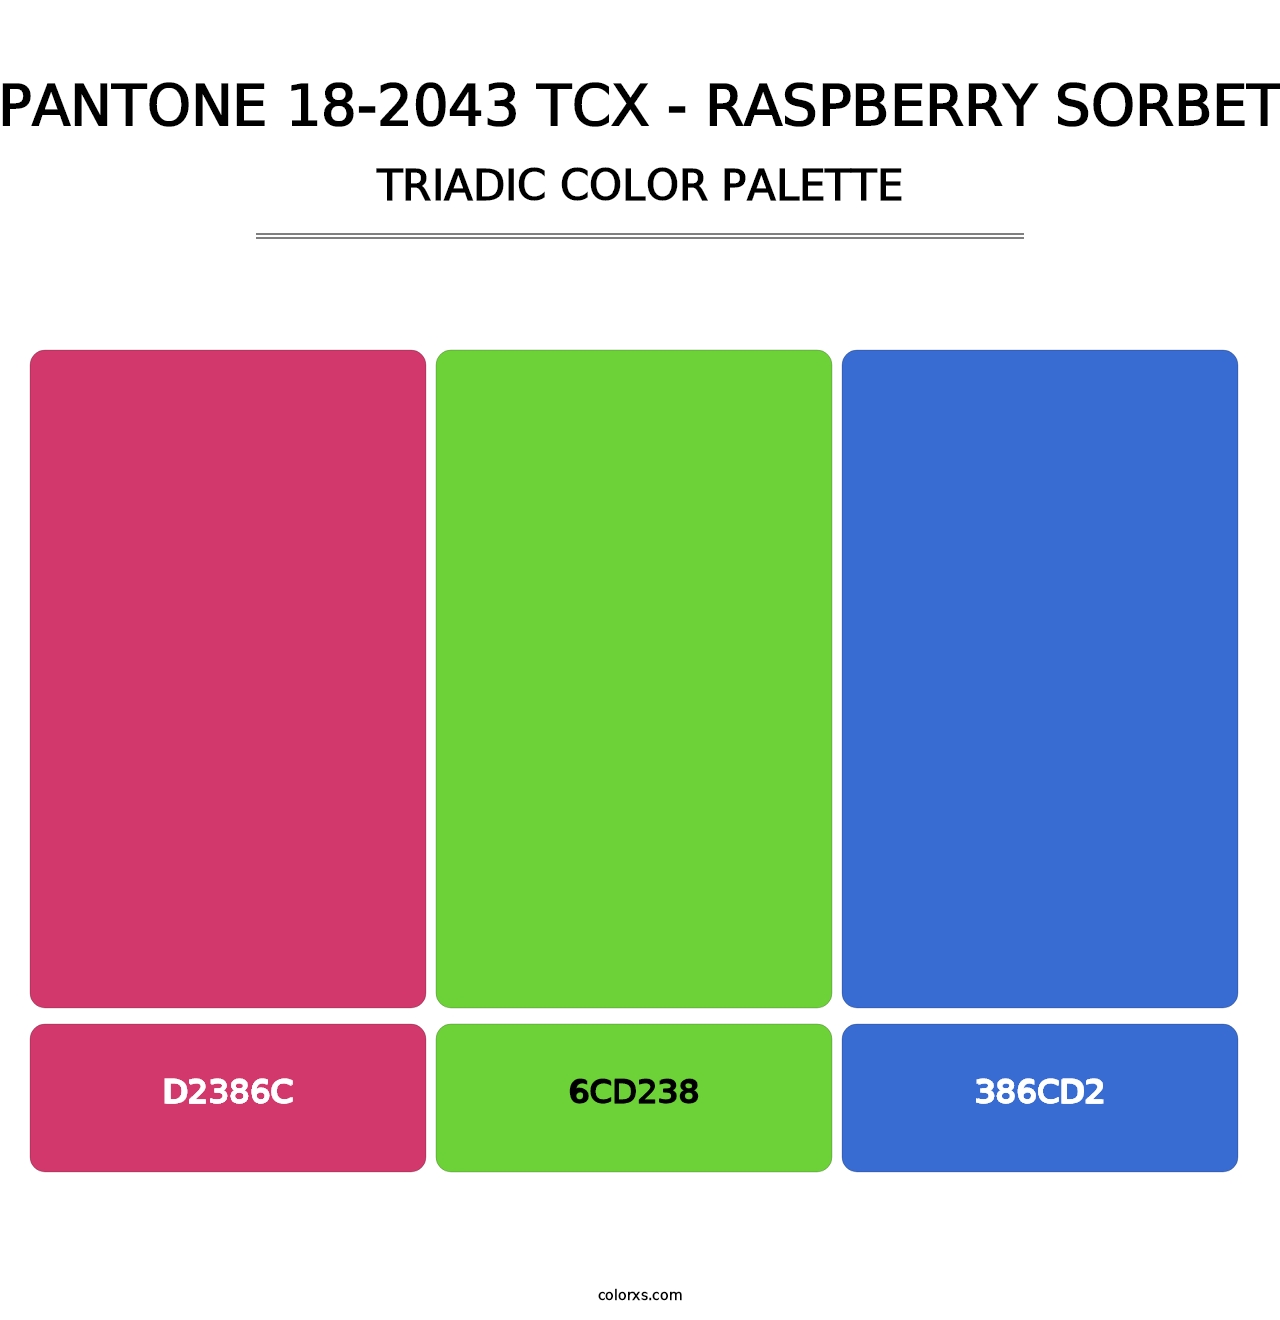 PANTONE 18-2043 TCX - Raspberry Sorbet - Triadic Color Palette